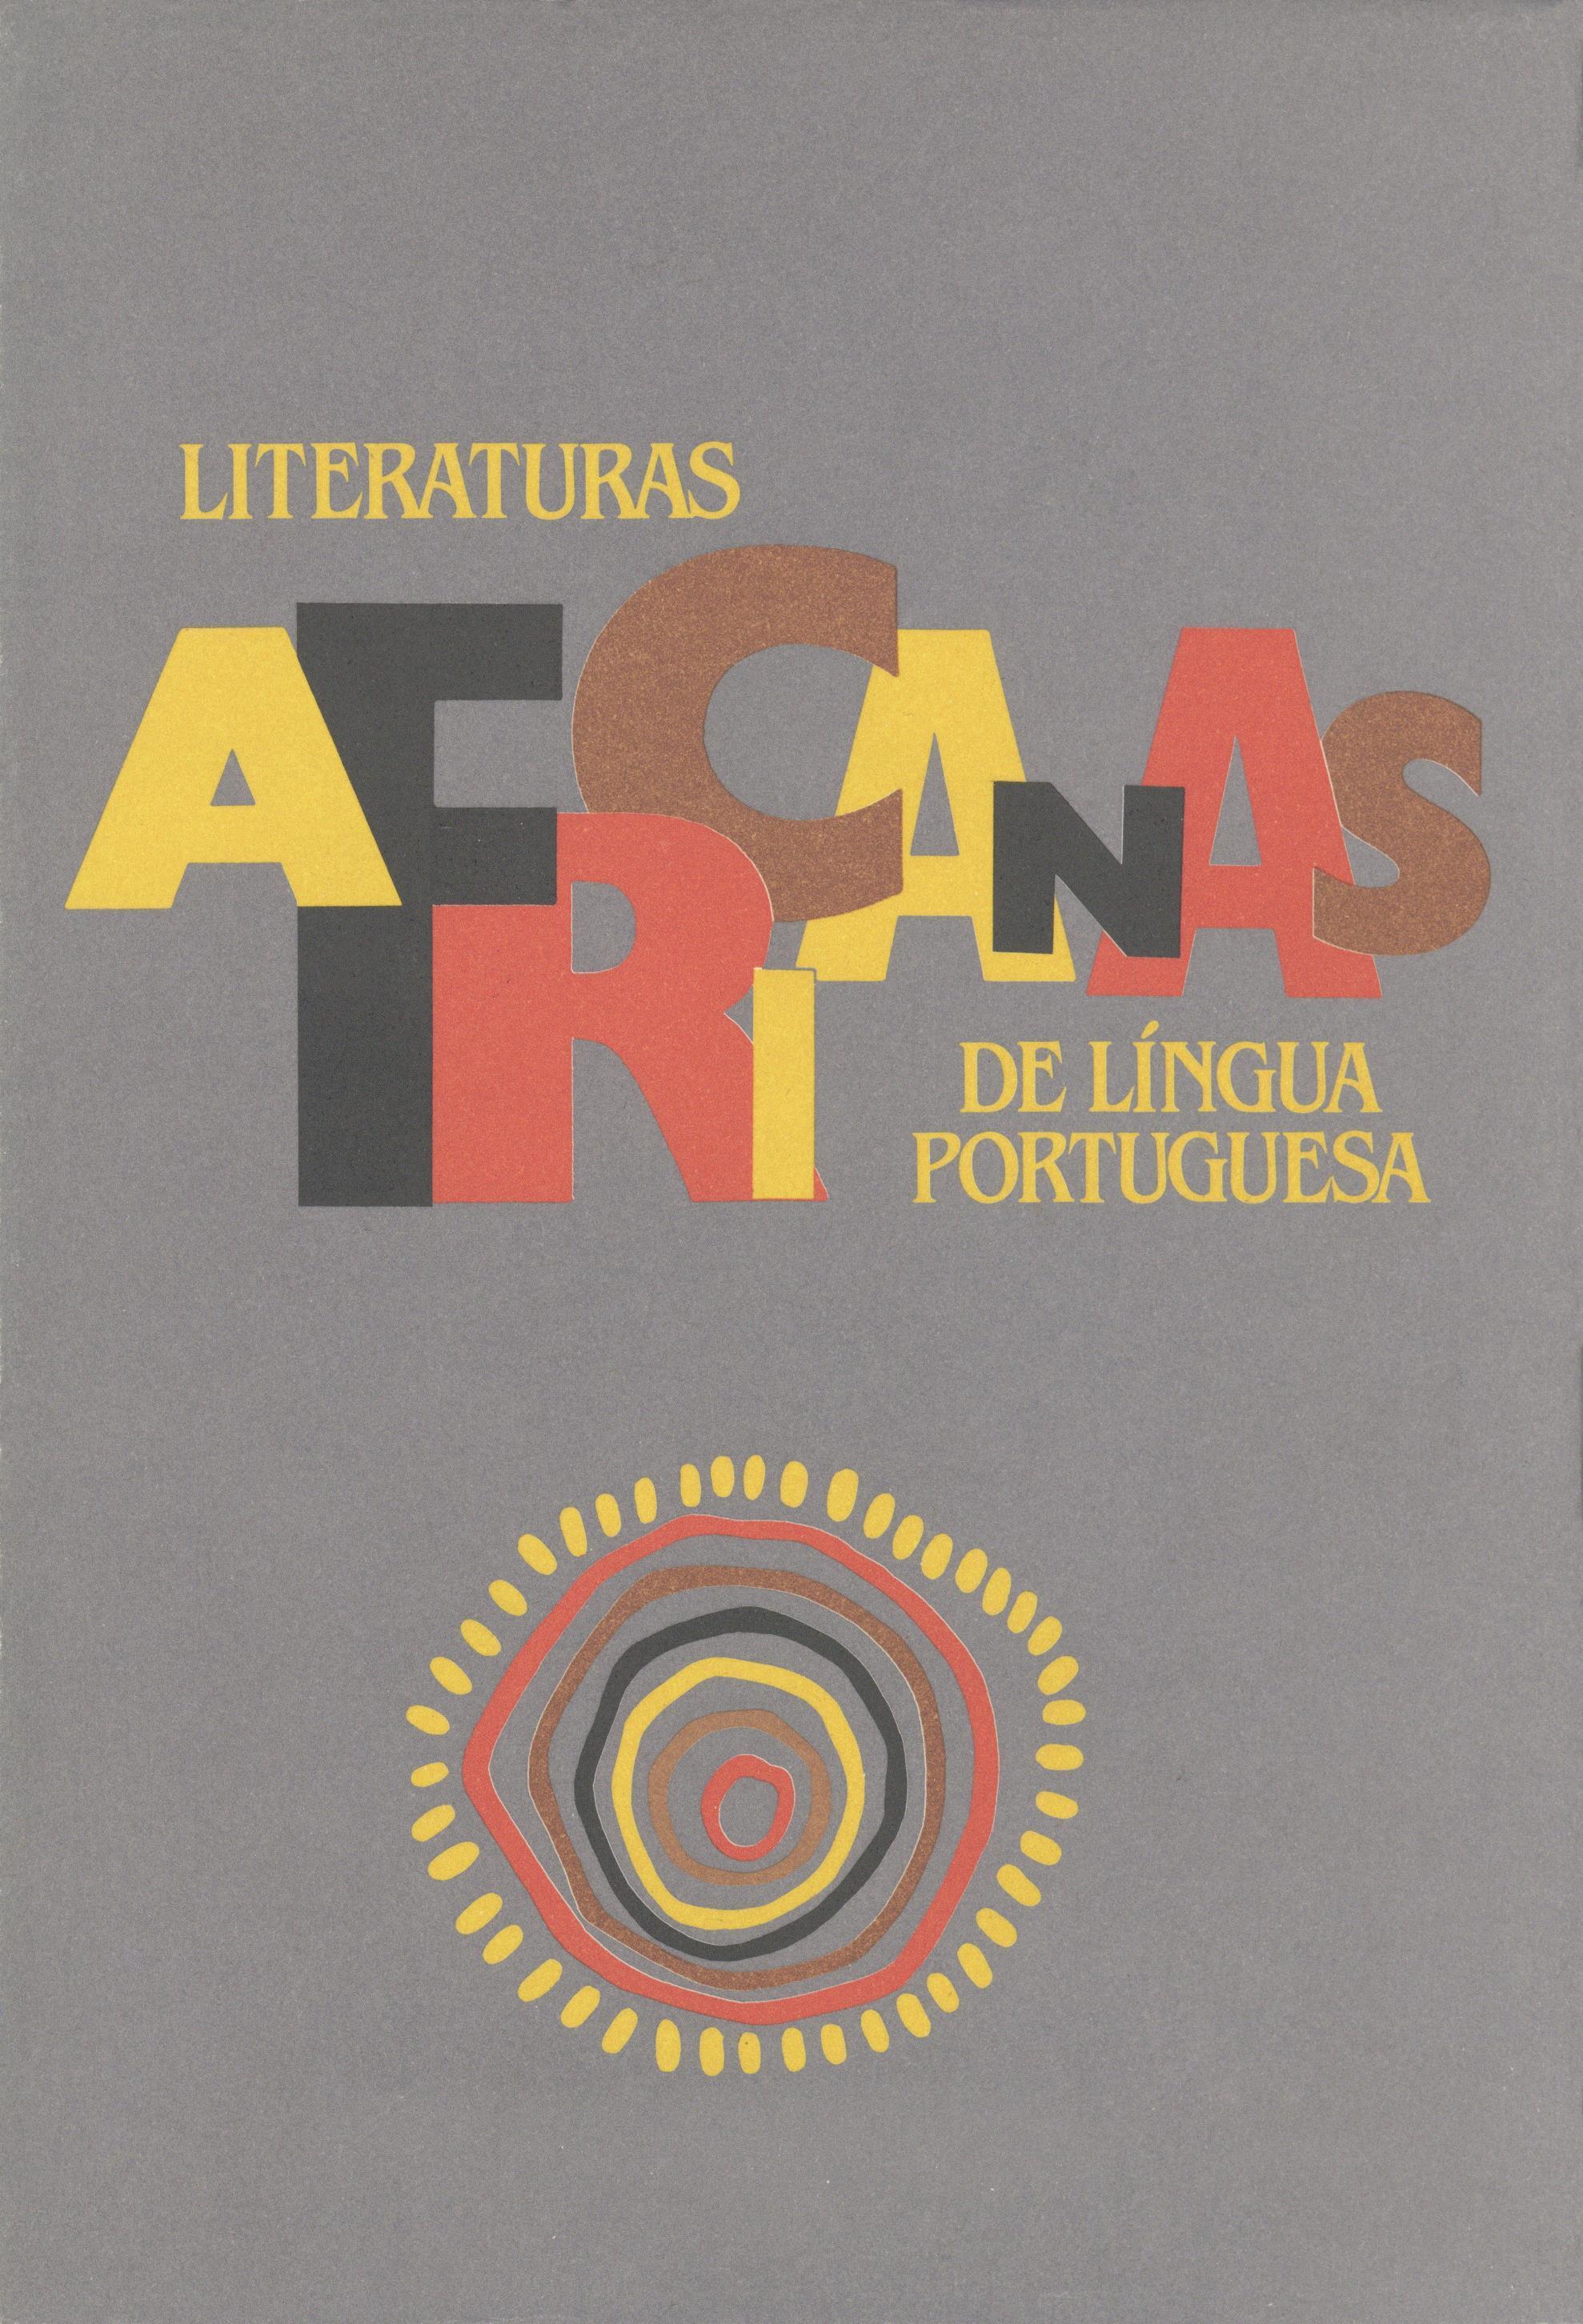 Literaturas Africanas de Língua Portuguesa